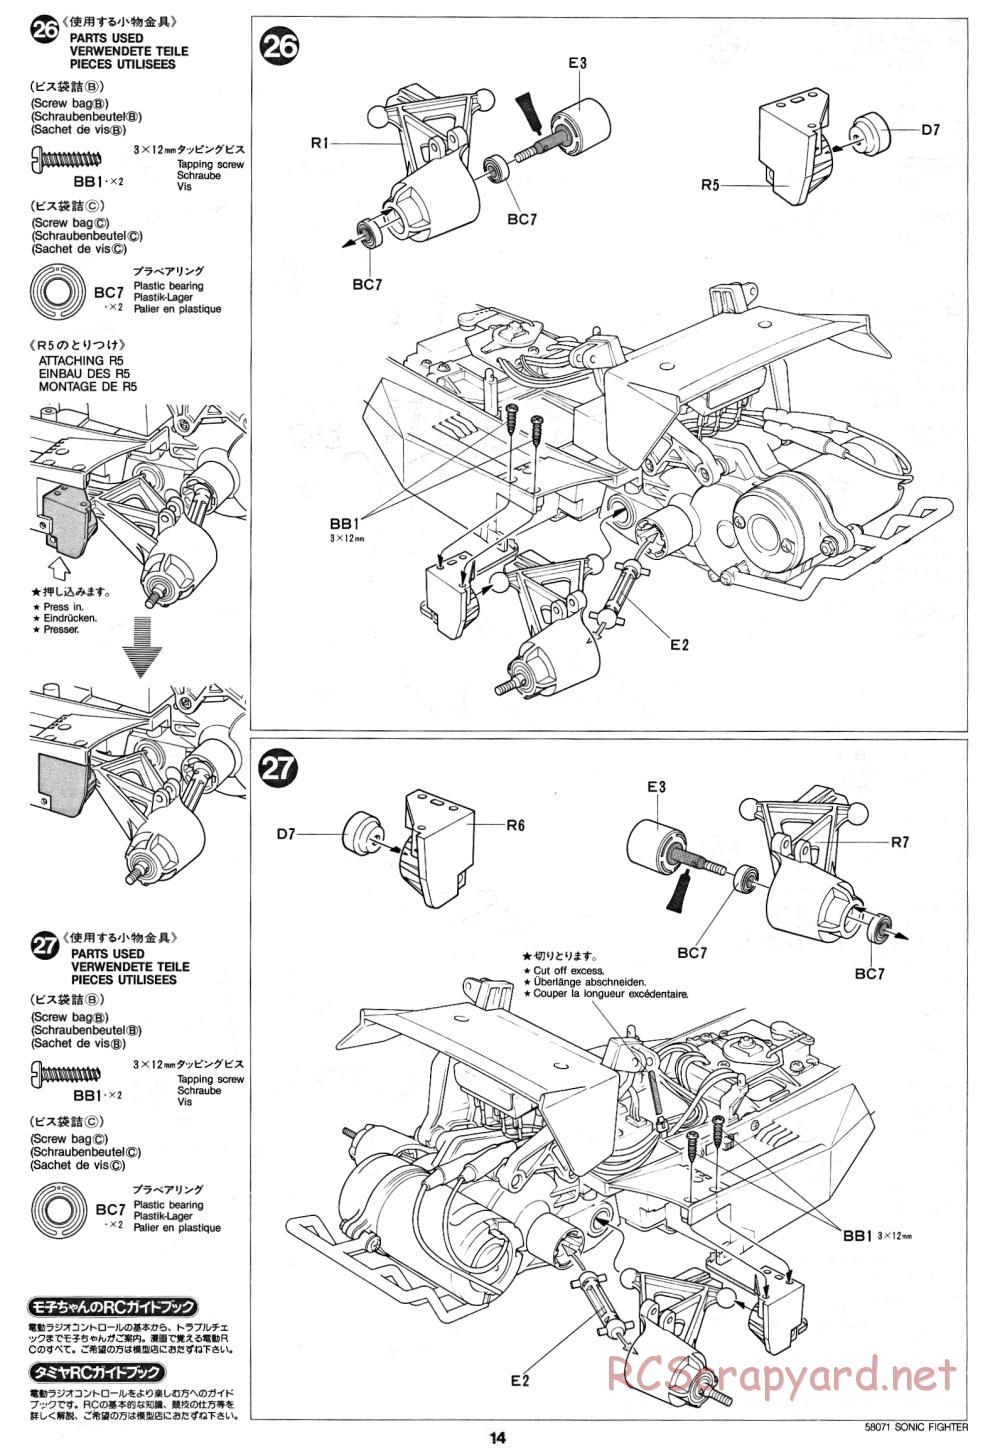 Tamiya - Sonic Fighter - 58071 - Manual - Page 14